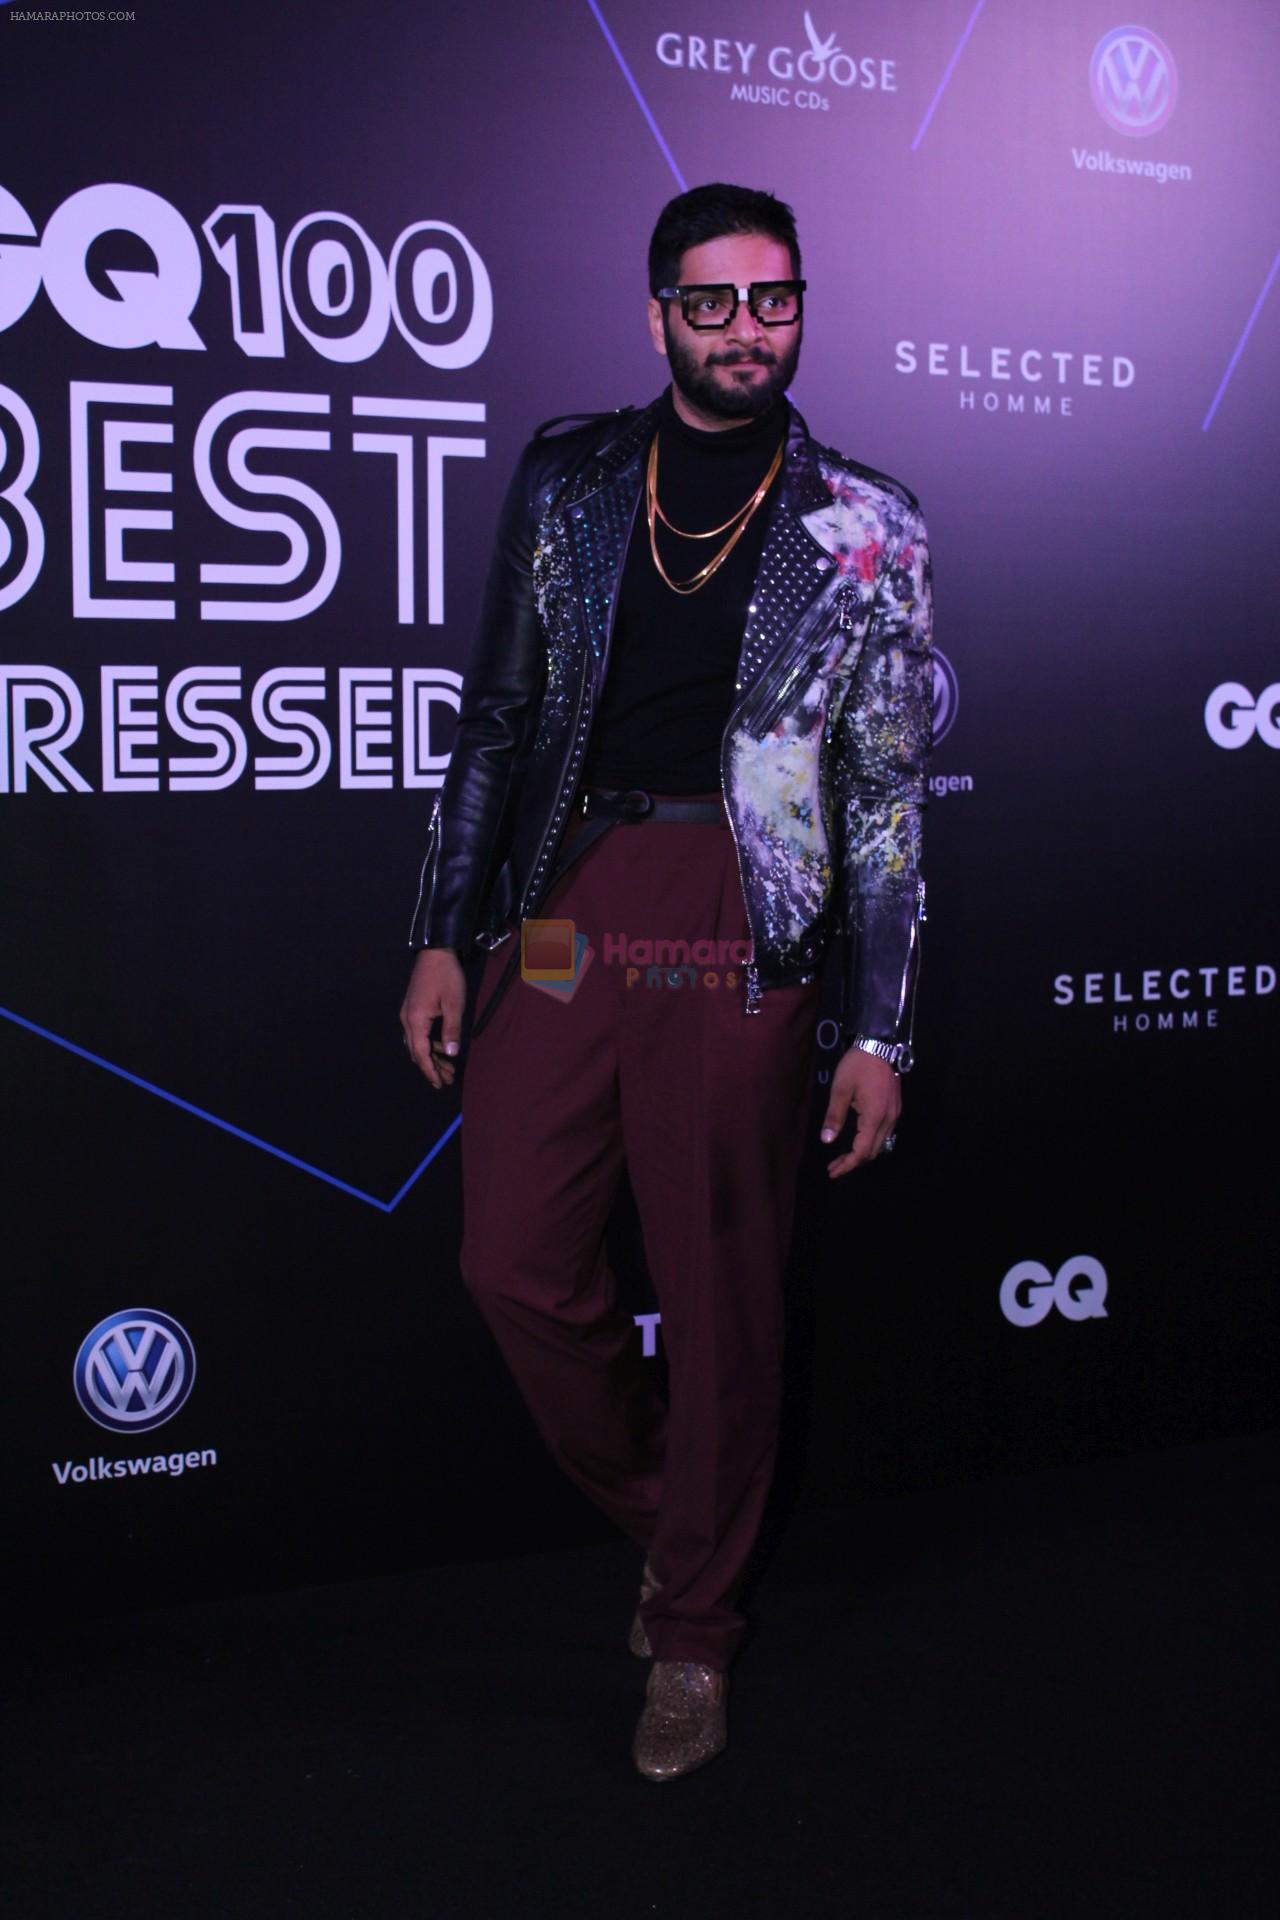 Ali Fazal at GQ 100 Best Dressed Awards 2019 on 2nd June 2019